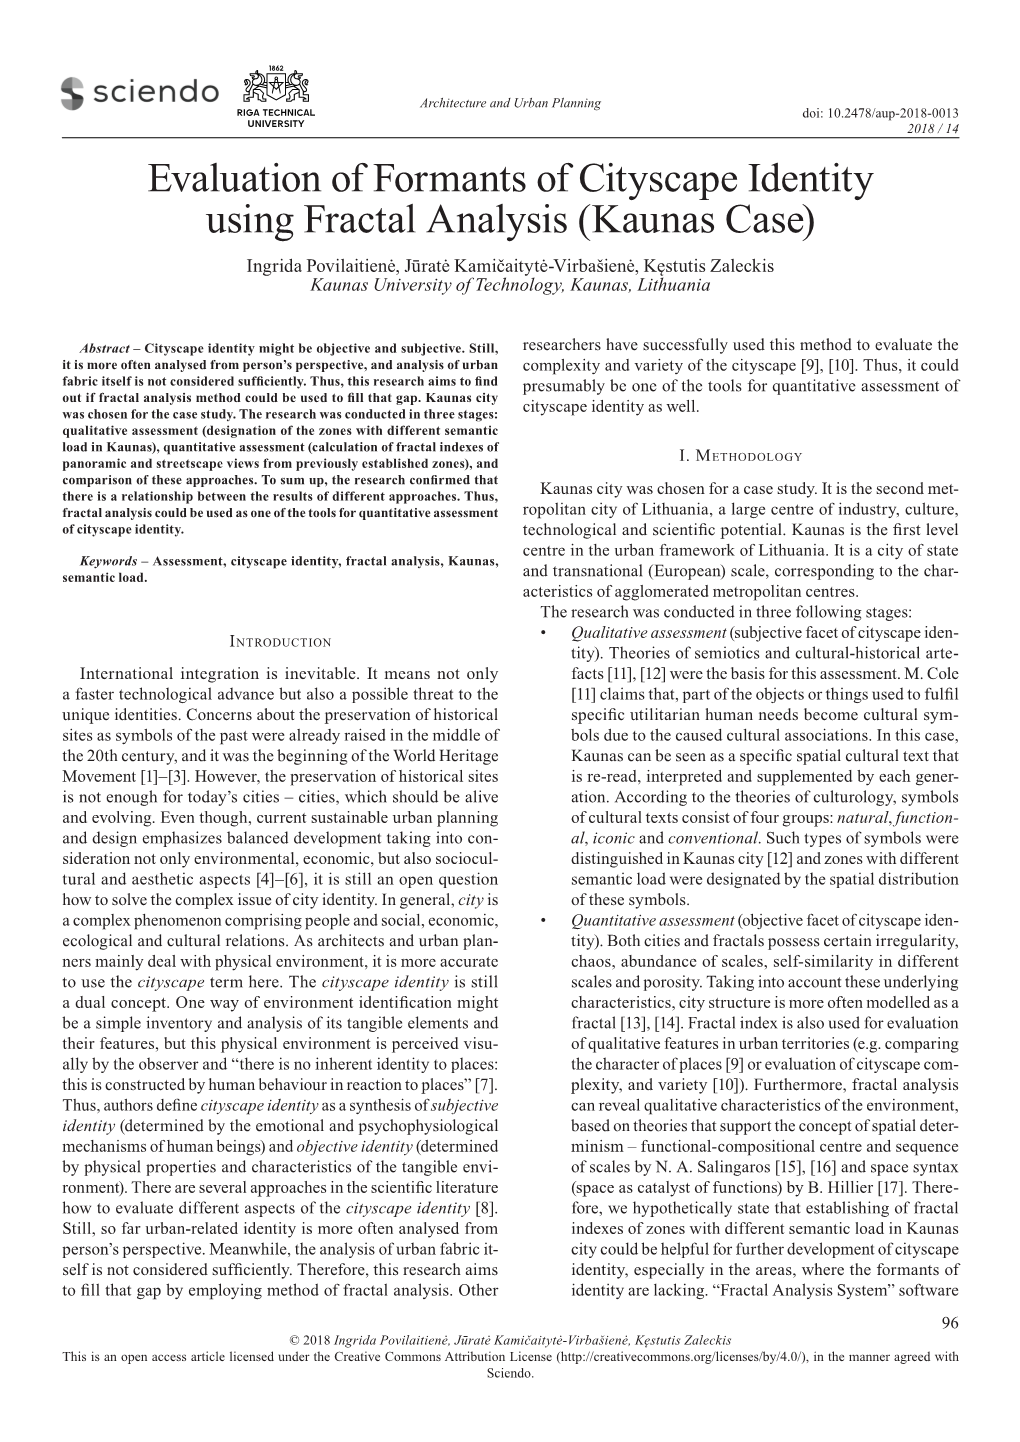 Evaluation of Formants of Cityscape Identity Using Fractal Analysis (Kaunas Case)